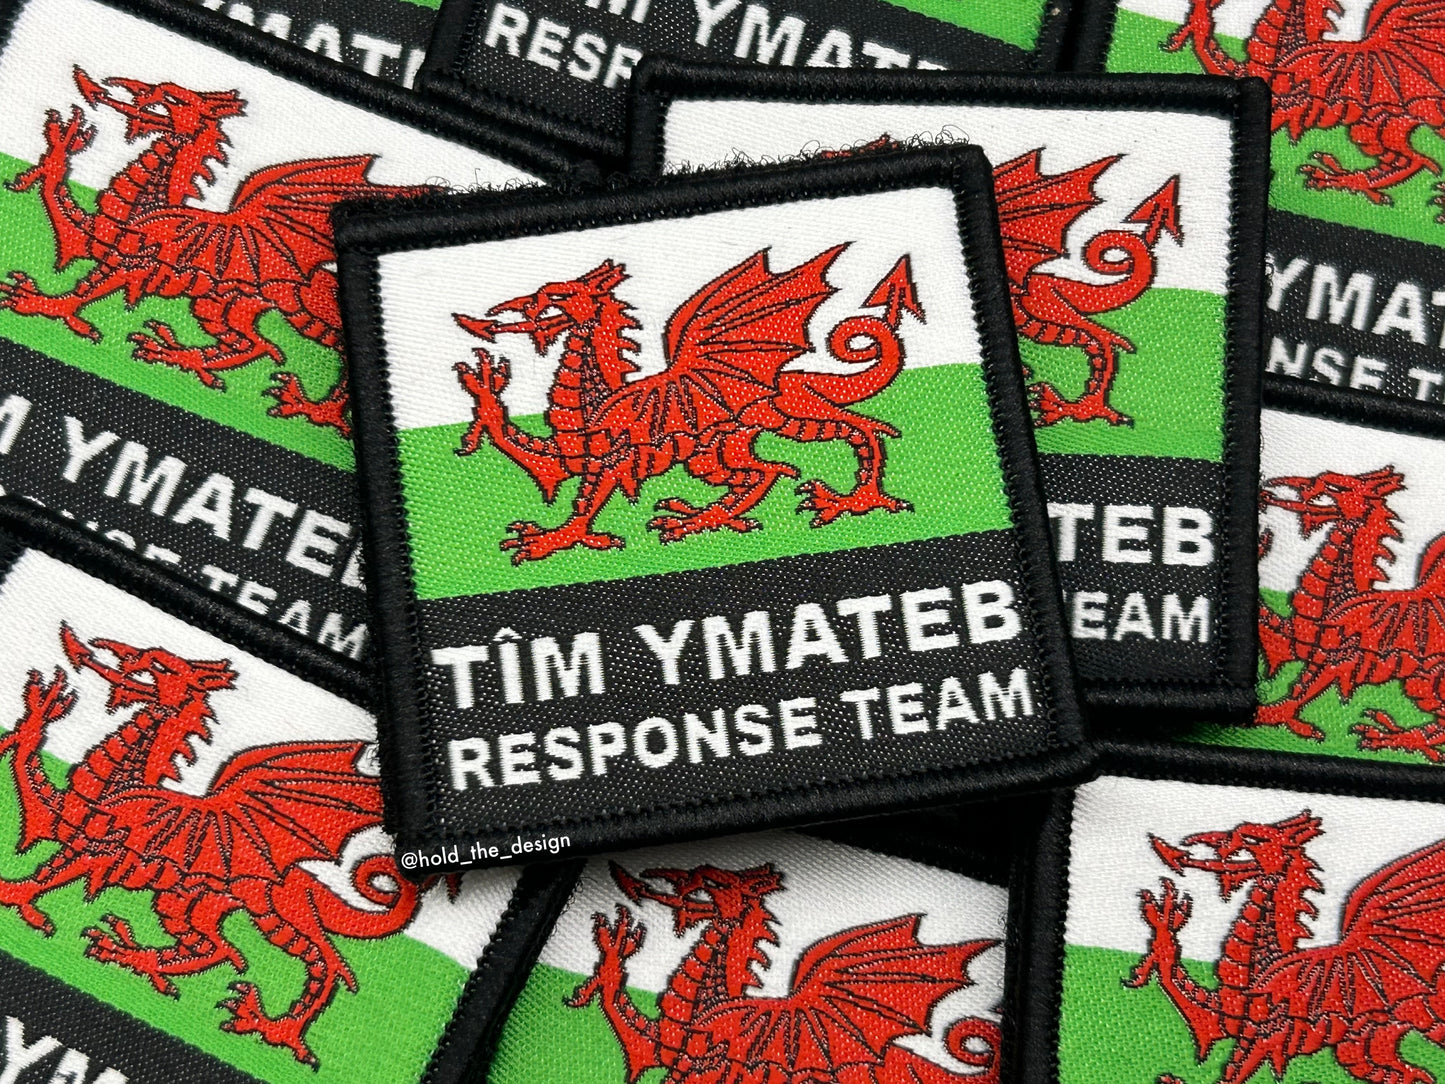 Wales Response Team - 5 x 5